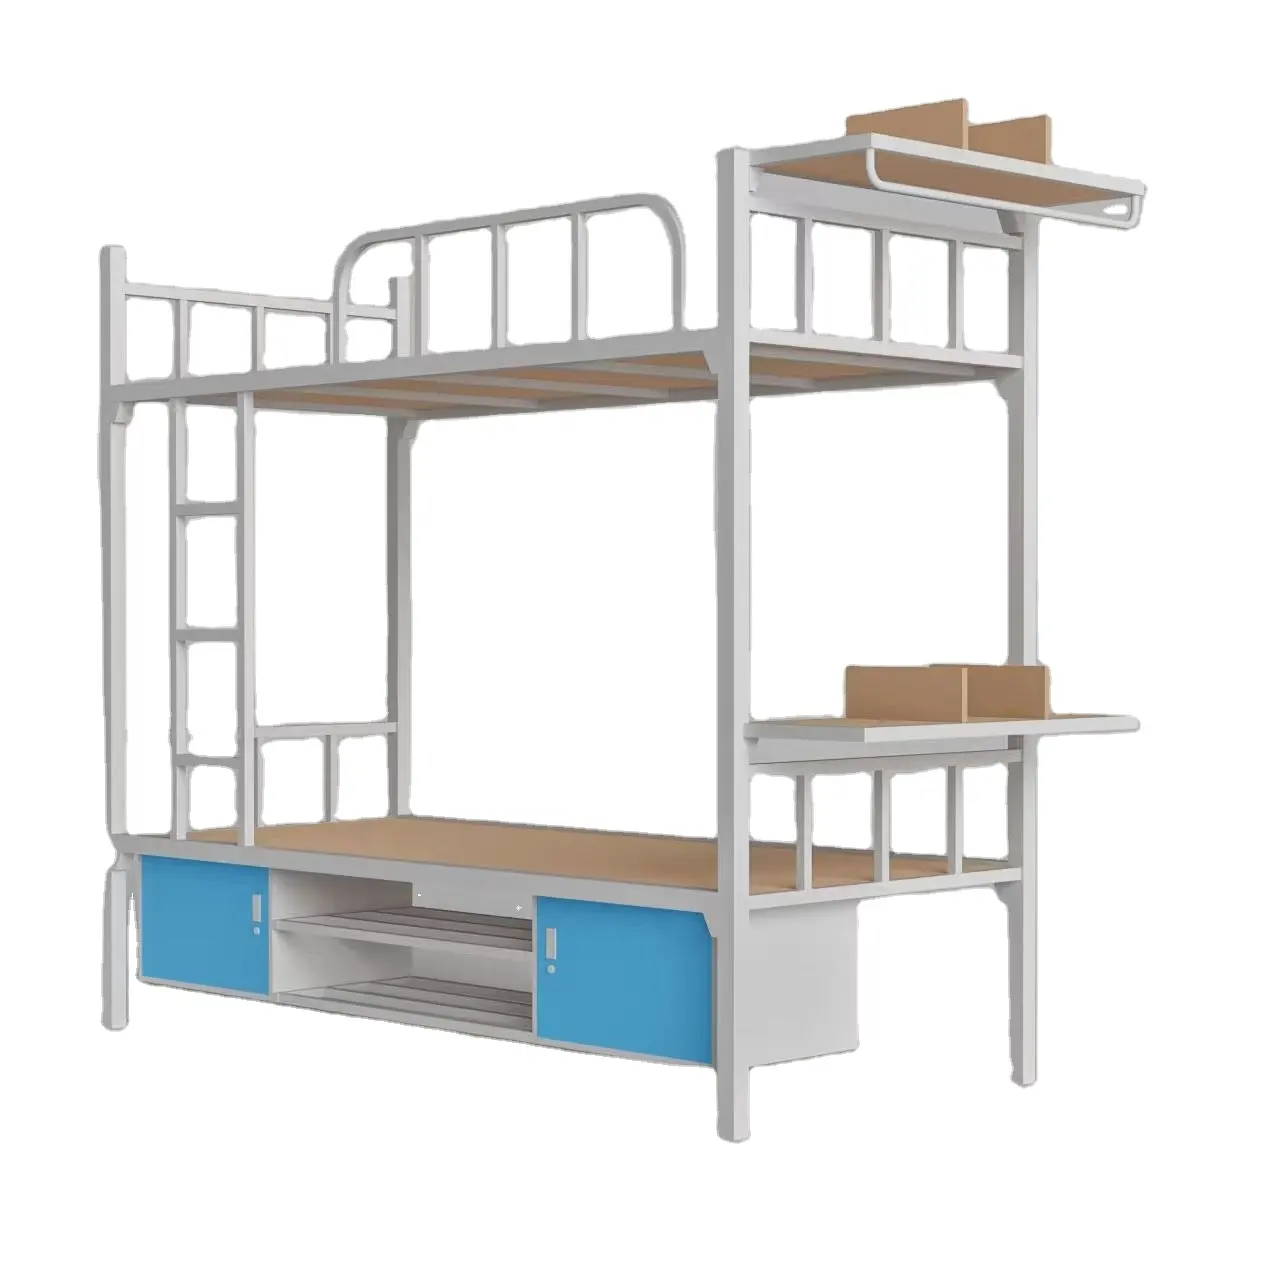 Wholesale Student Dormitory Metal Double Bunk Beds School Furniture